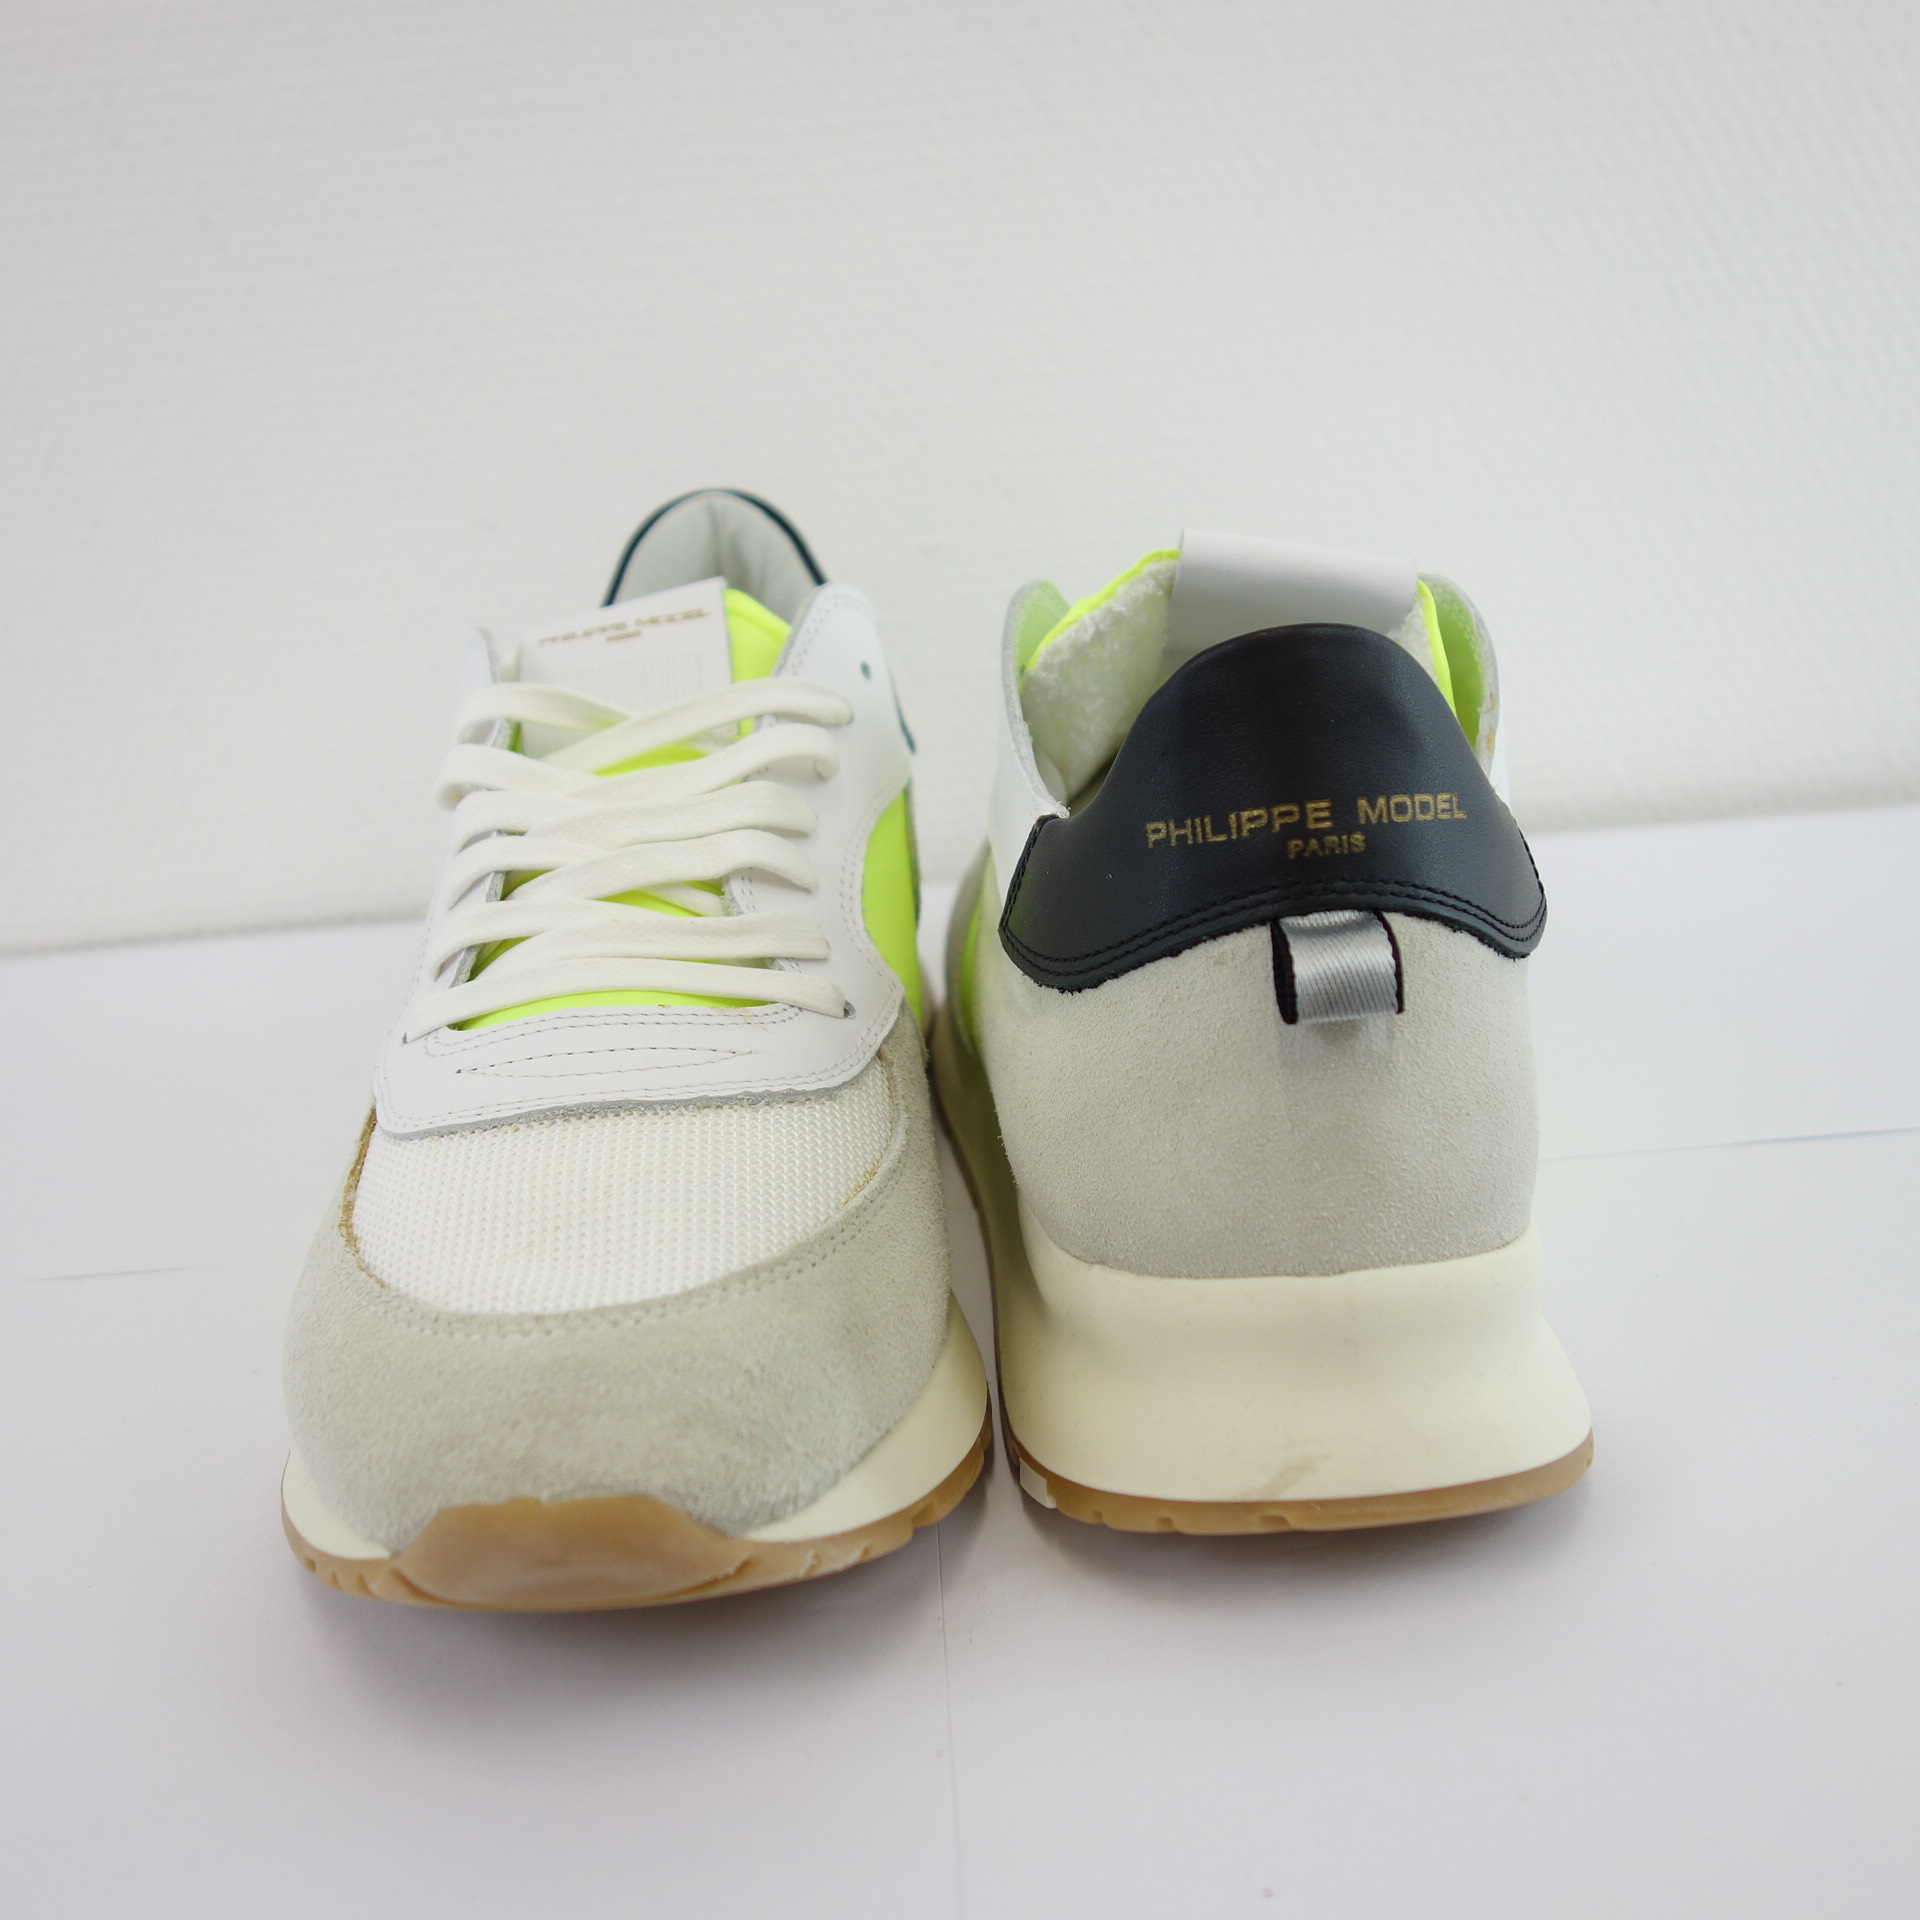 PHILIPPE MODEL Herren Schuhe Sneaker Sportschuhe Herrenschuhe Weiß Neon Montecarlo